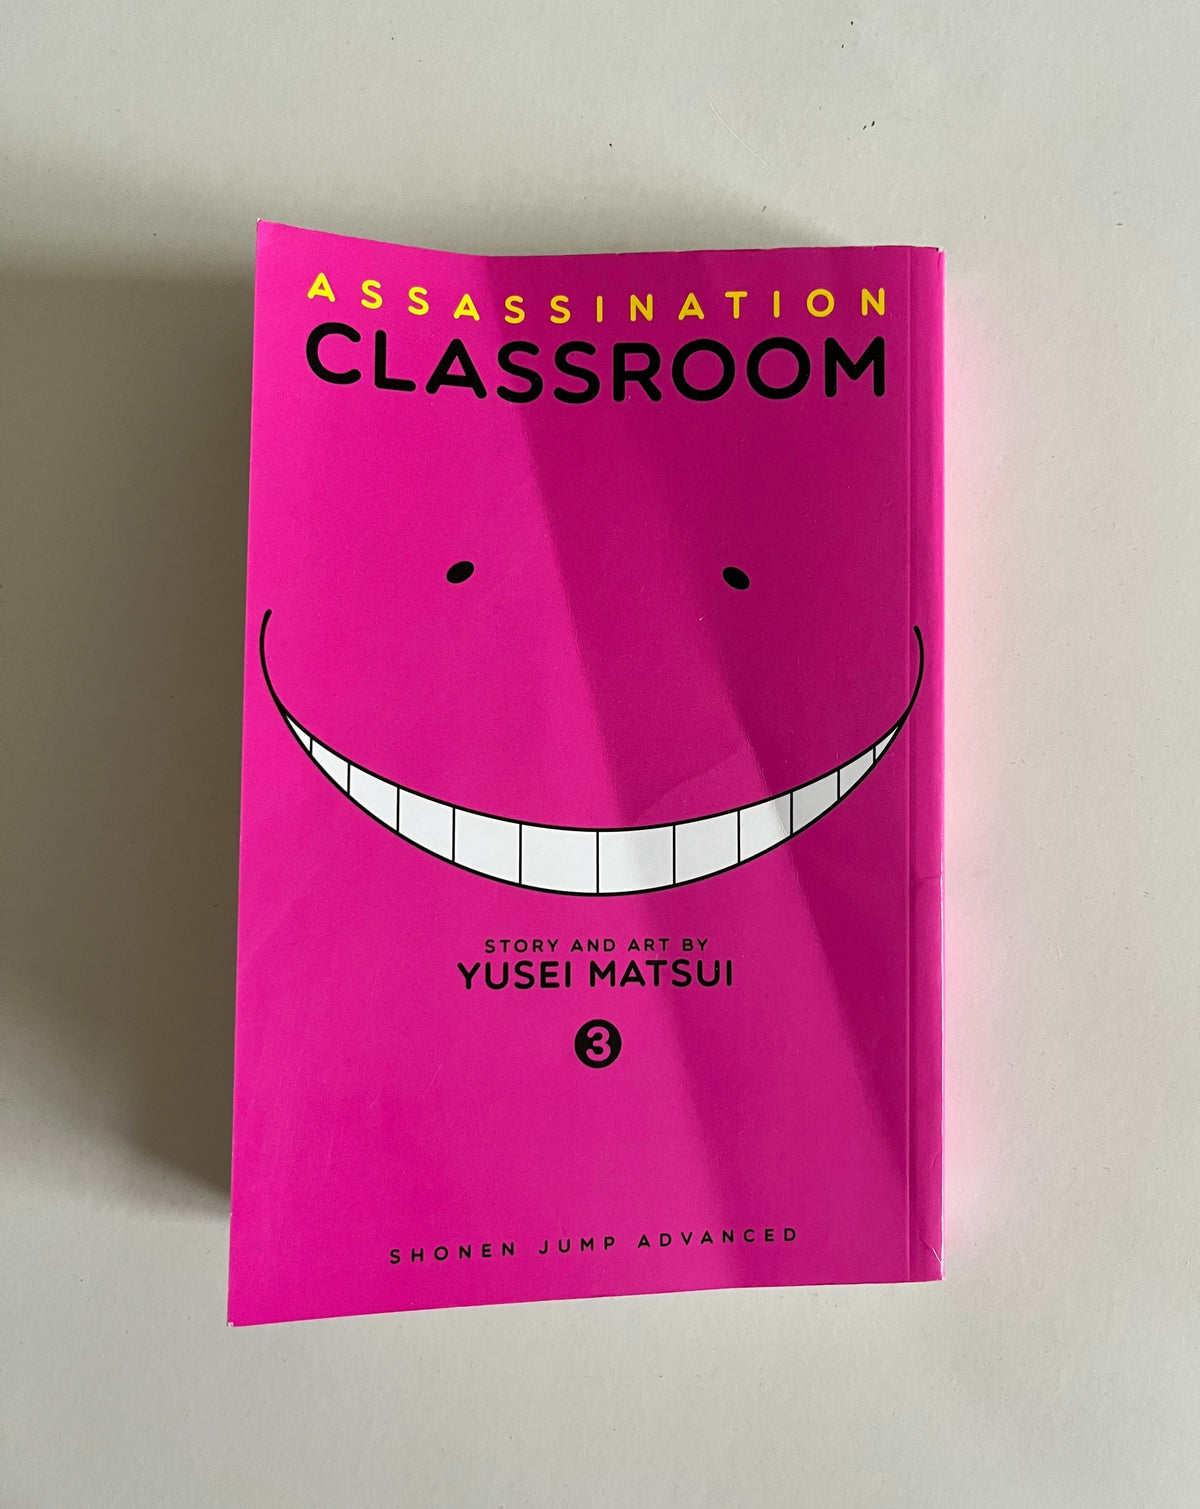 Assassination Classroom 3 by Yusei Matsui